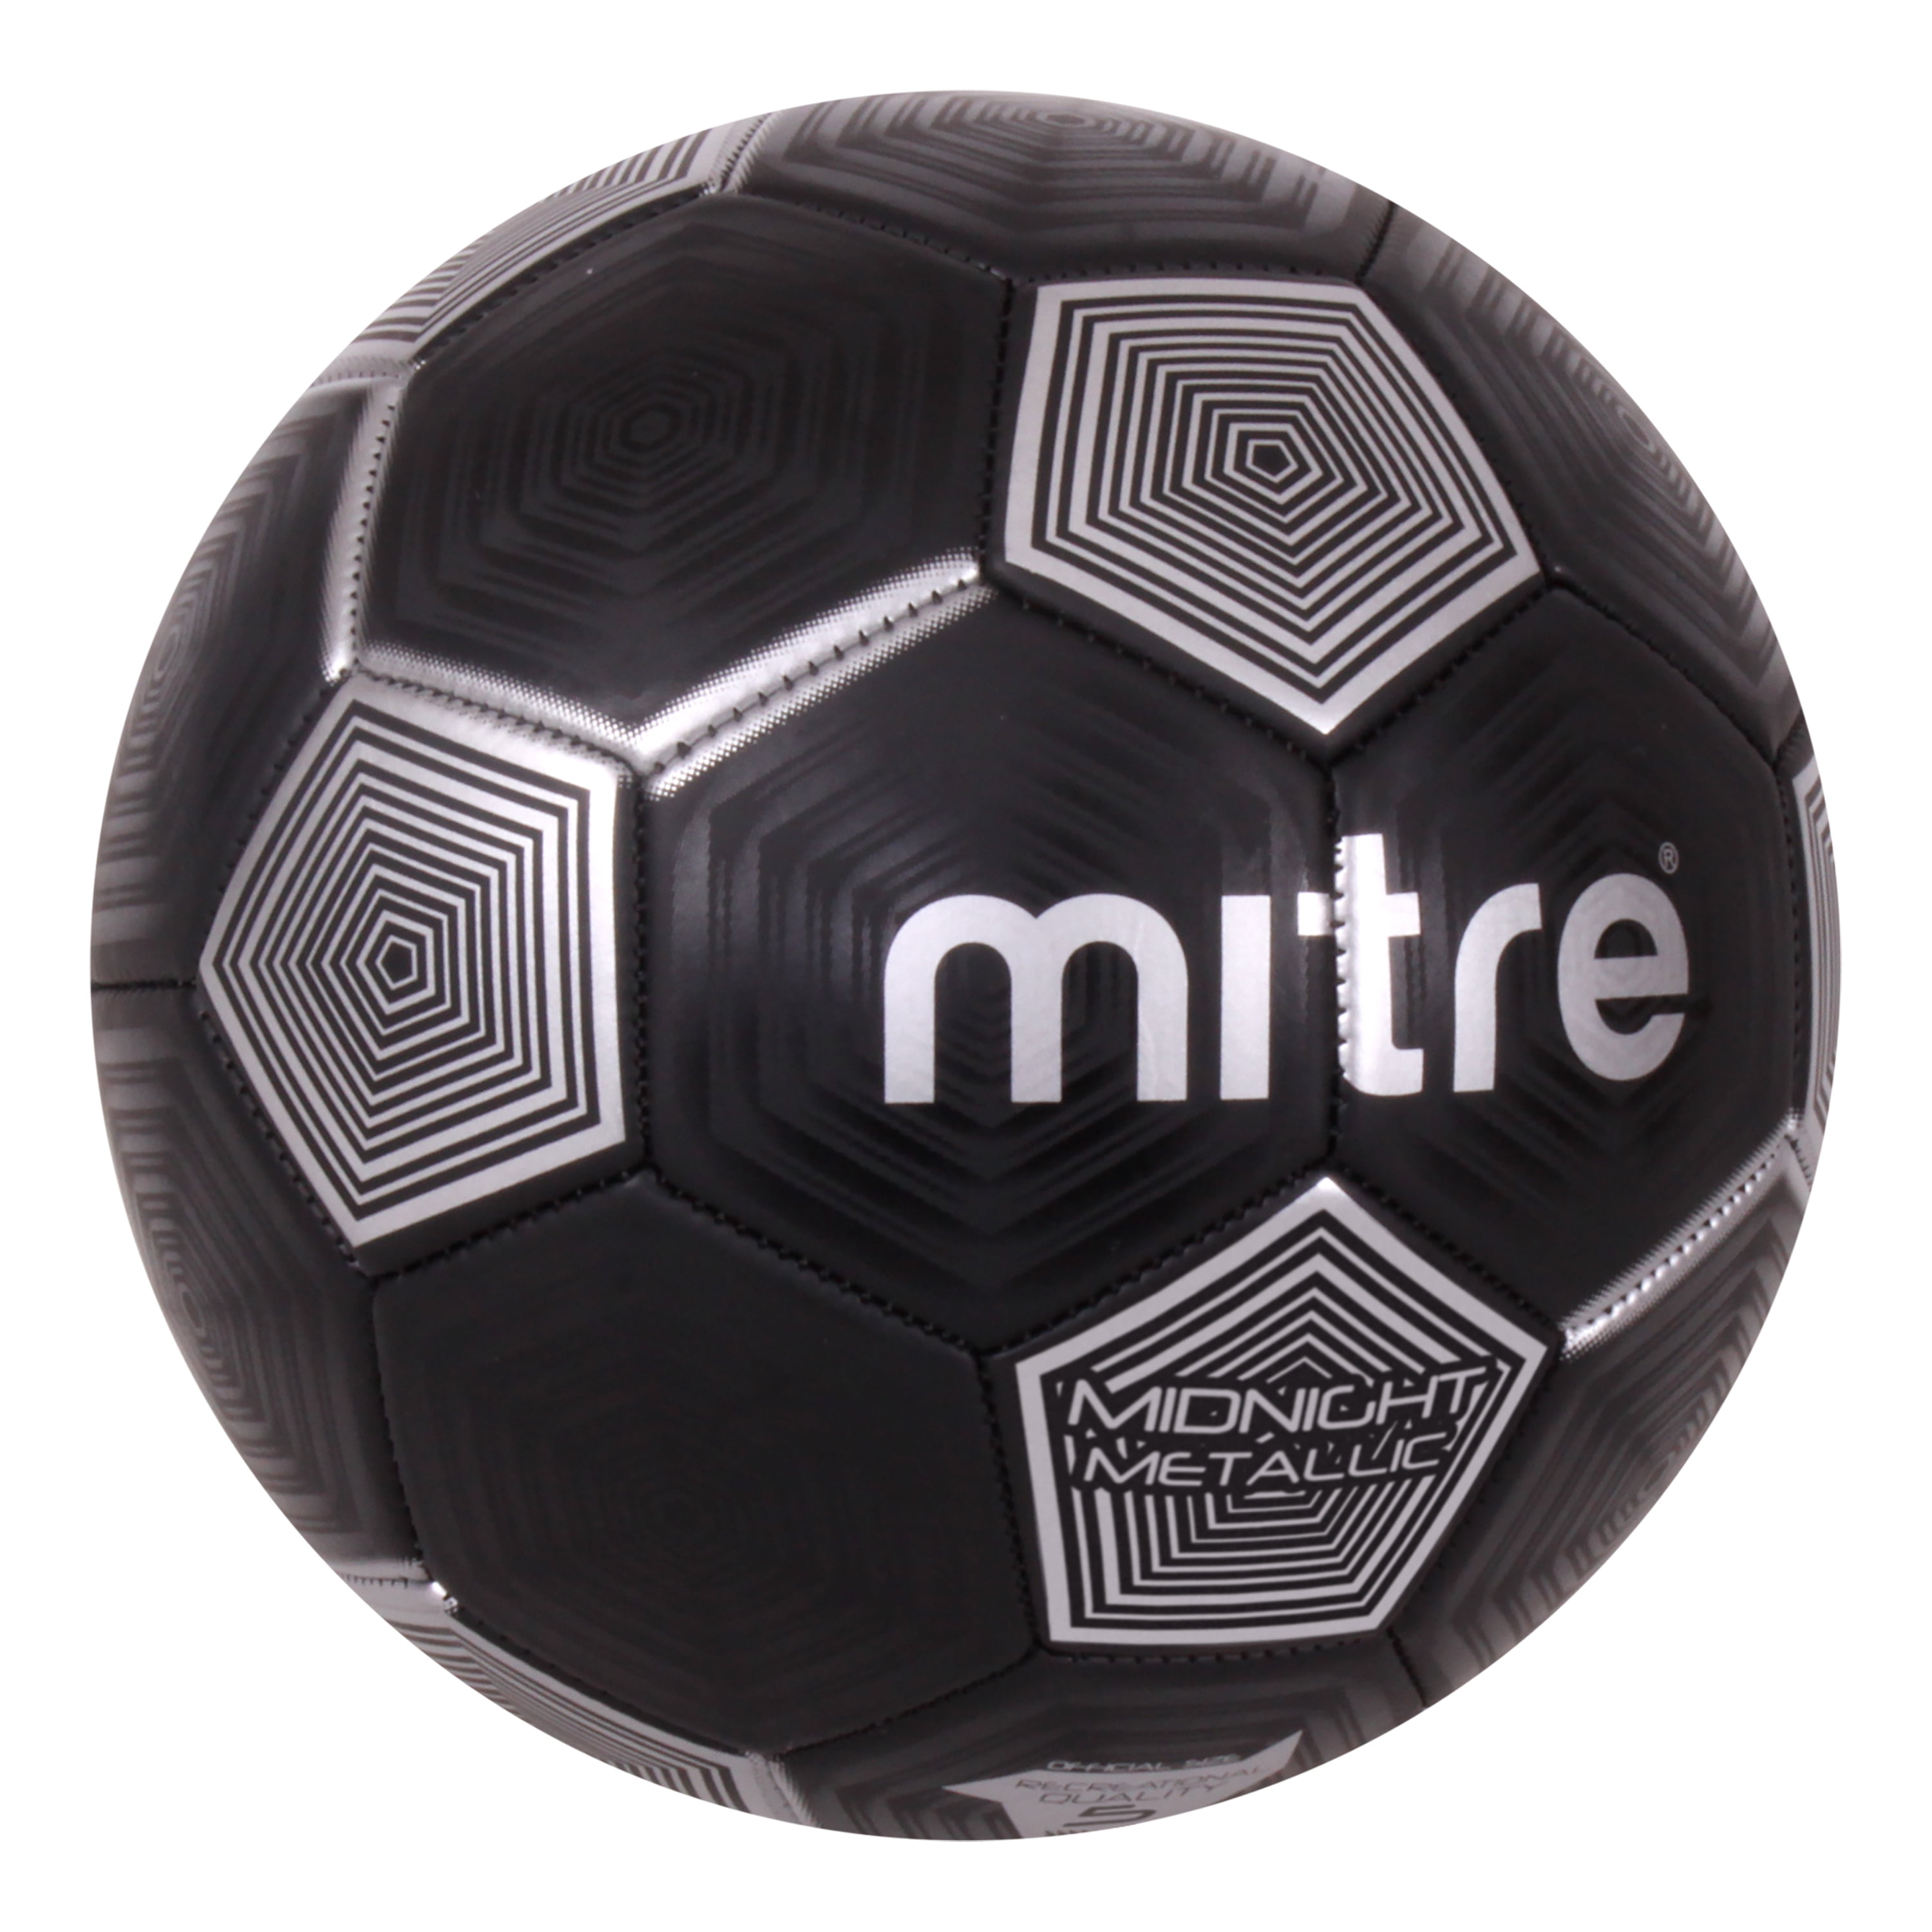 Mitre Midnight Metallic Black Soccer Ball Size 5 for sale online 